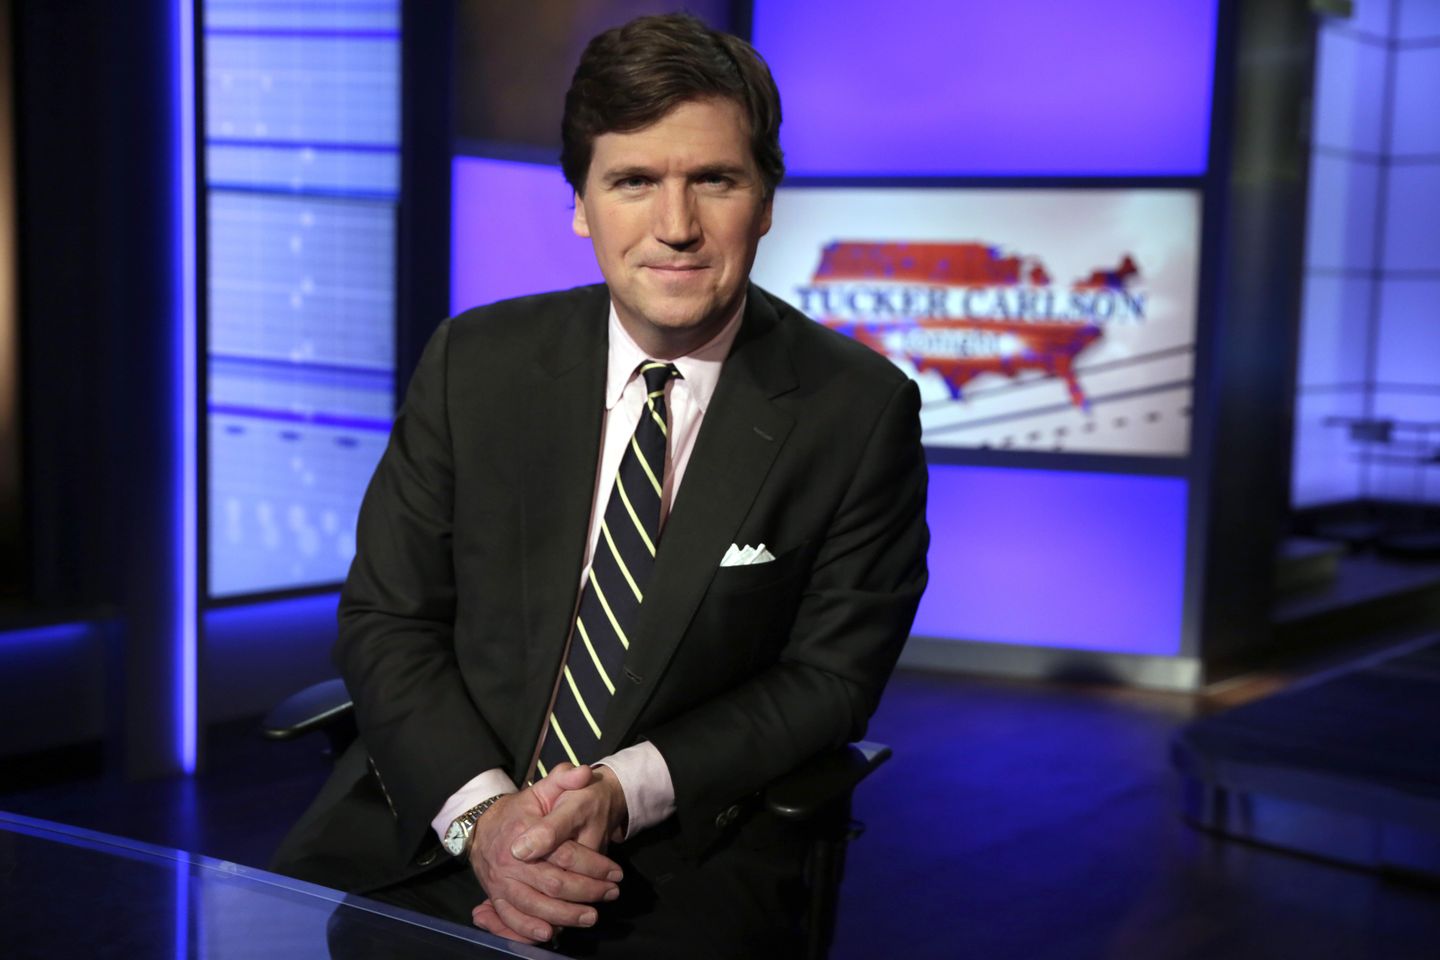 Inside the Beltway: Fox News still the leader at 25